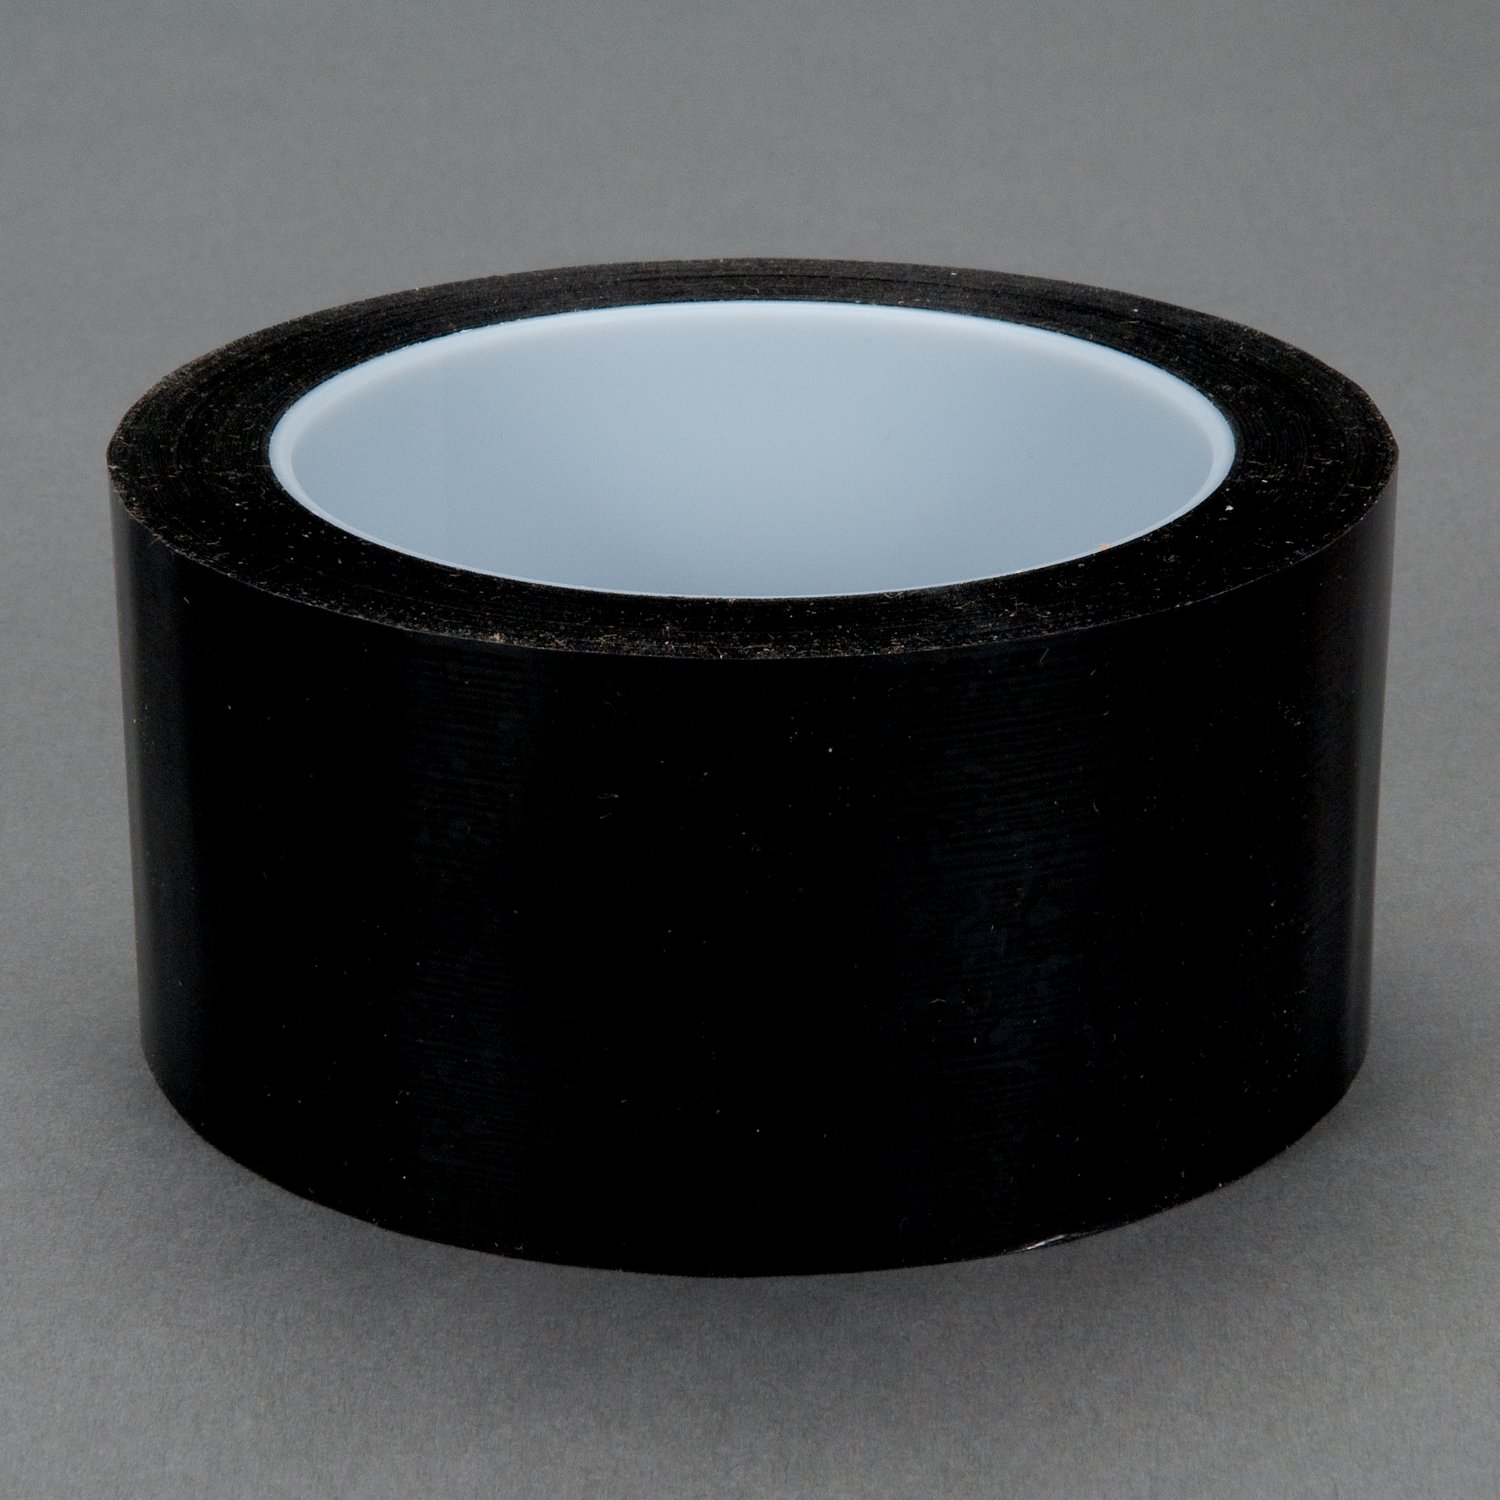 7010045177 - 3M Polyester Film Tape 850, Black, 18 in x 72 yd, 1.9 mil, 1 roll per
case